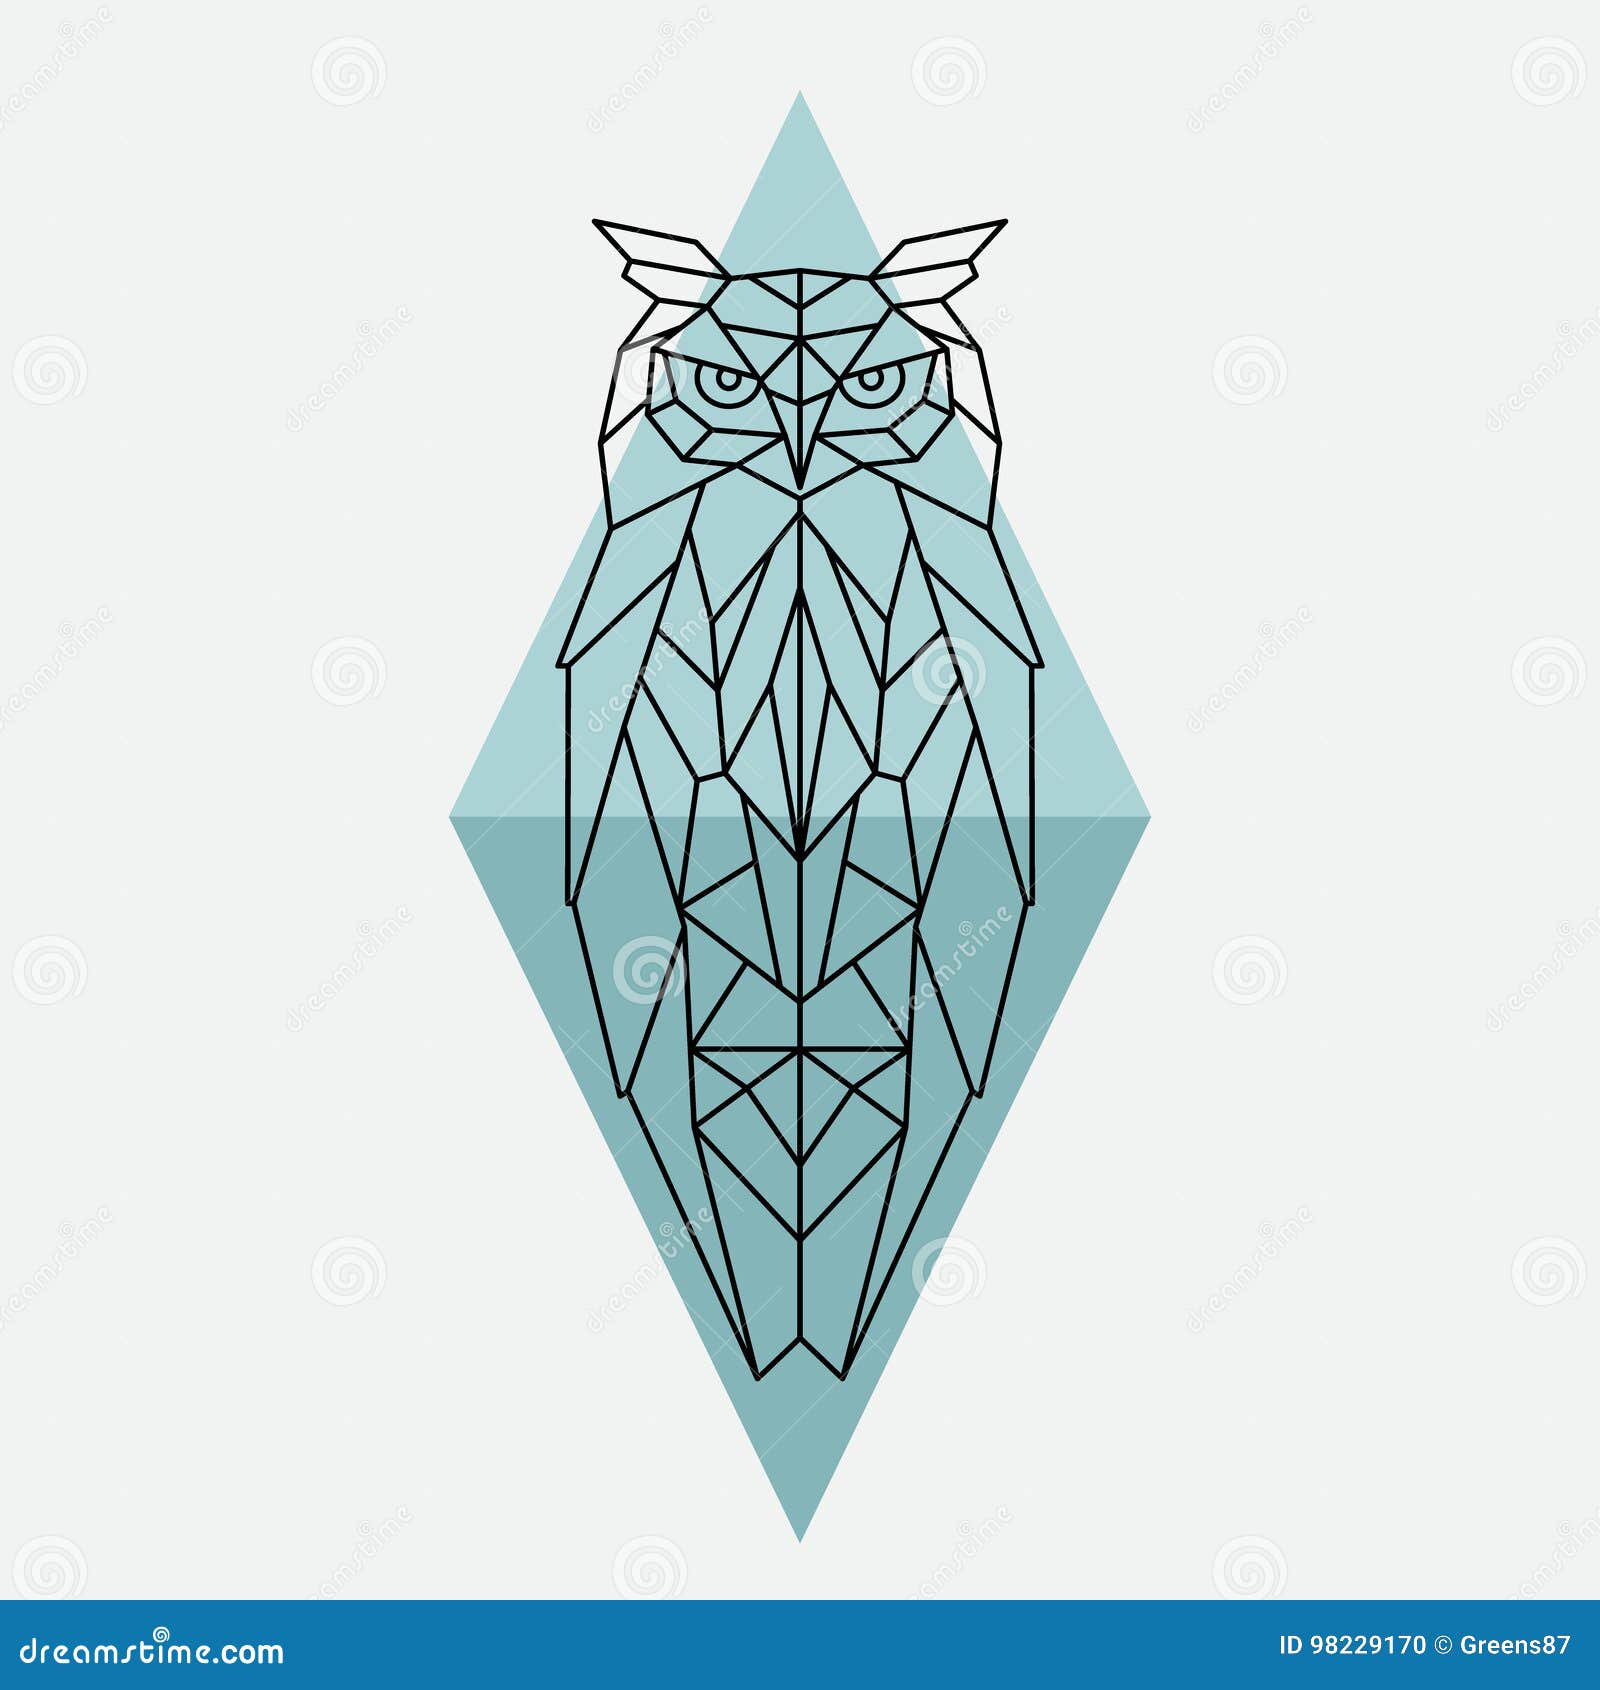 Adam  Ink  Black and grey geometric owl tattoo from  Facebook